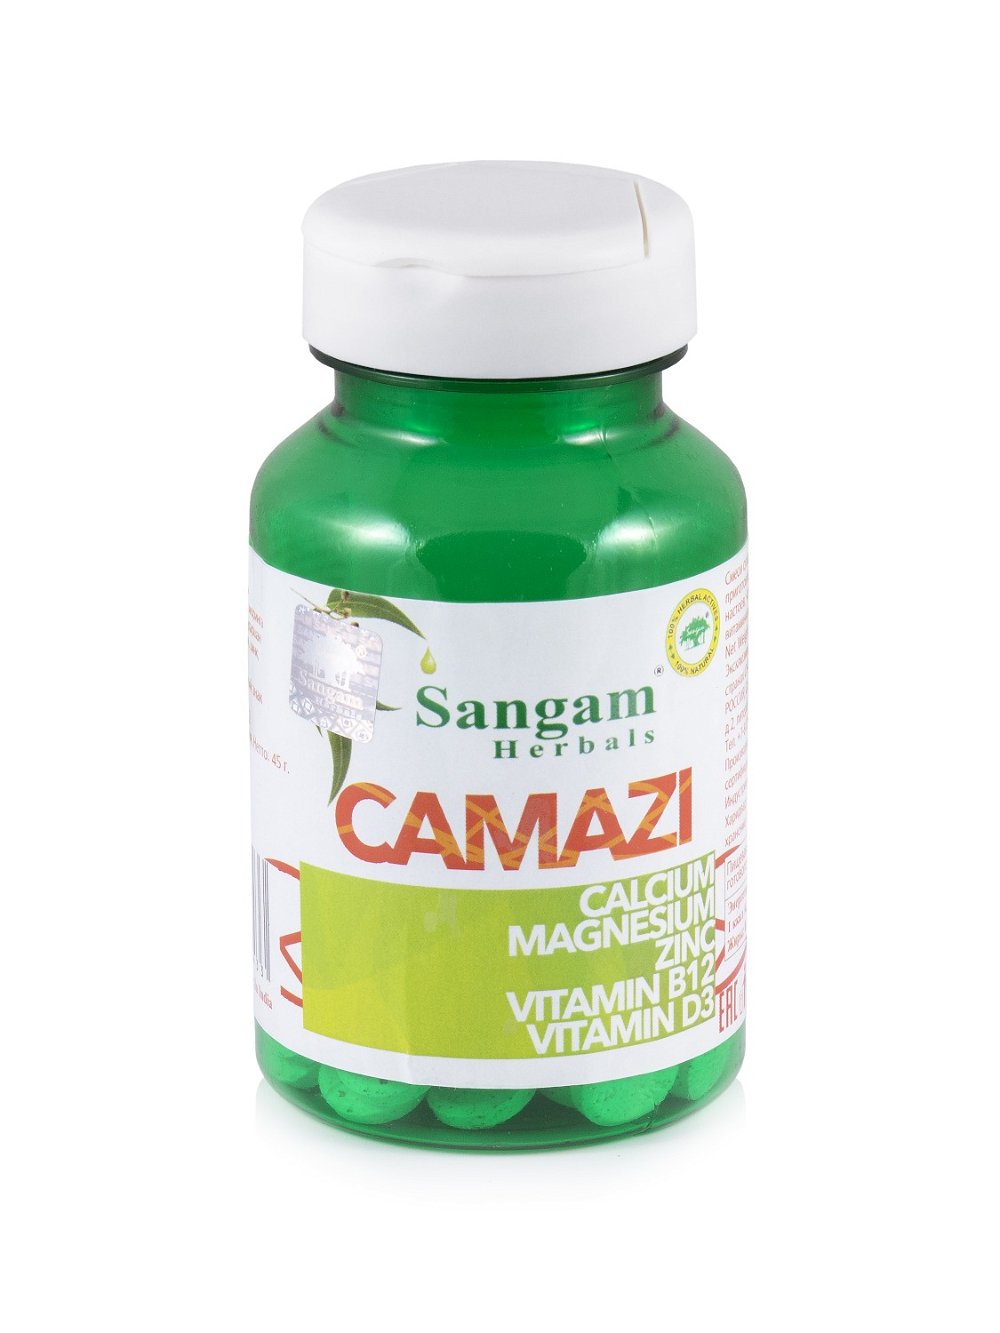 Камази Sangam Herbals (60 таблеток), Камази 